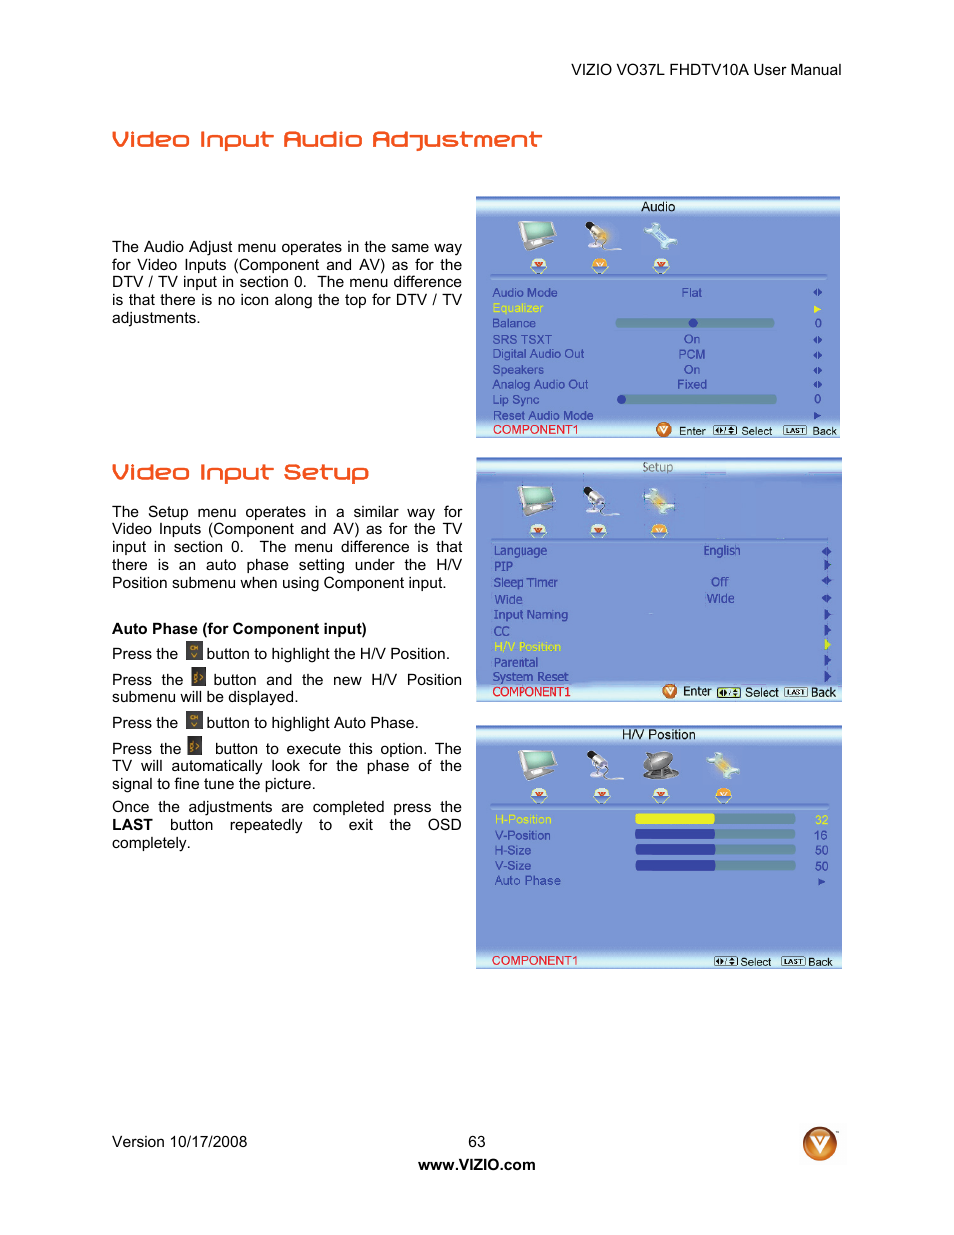 Video input audio adjustment, Video input setup | Vizio VO37L FHDTV10A User Manual | Page 63 / 80